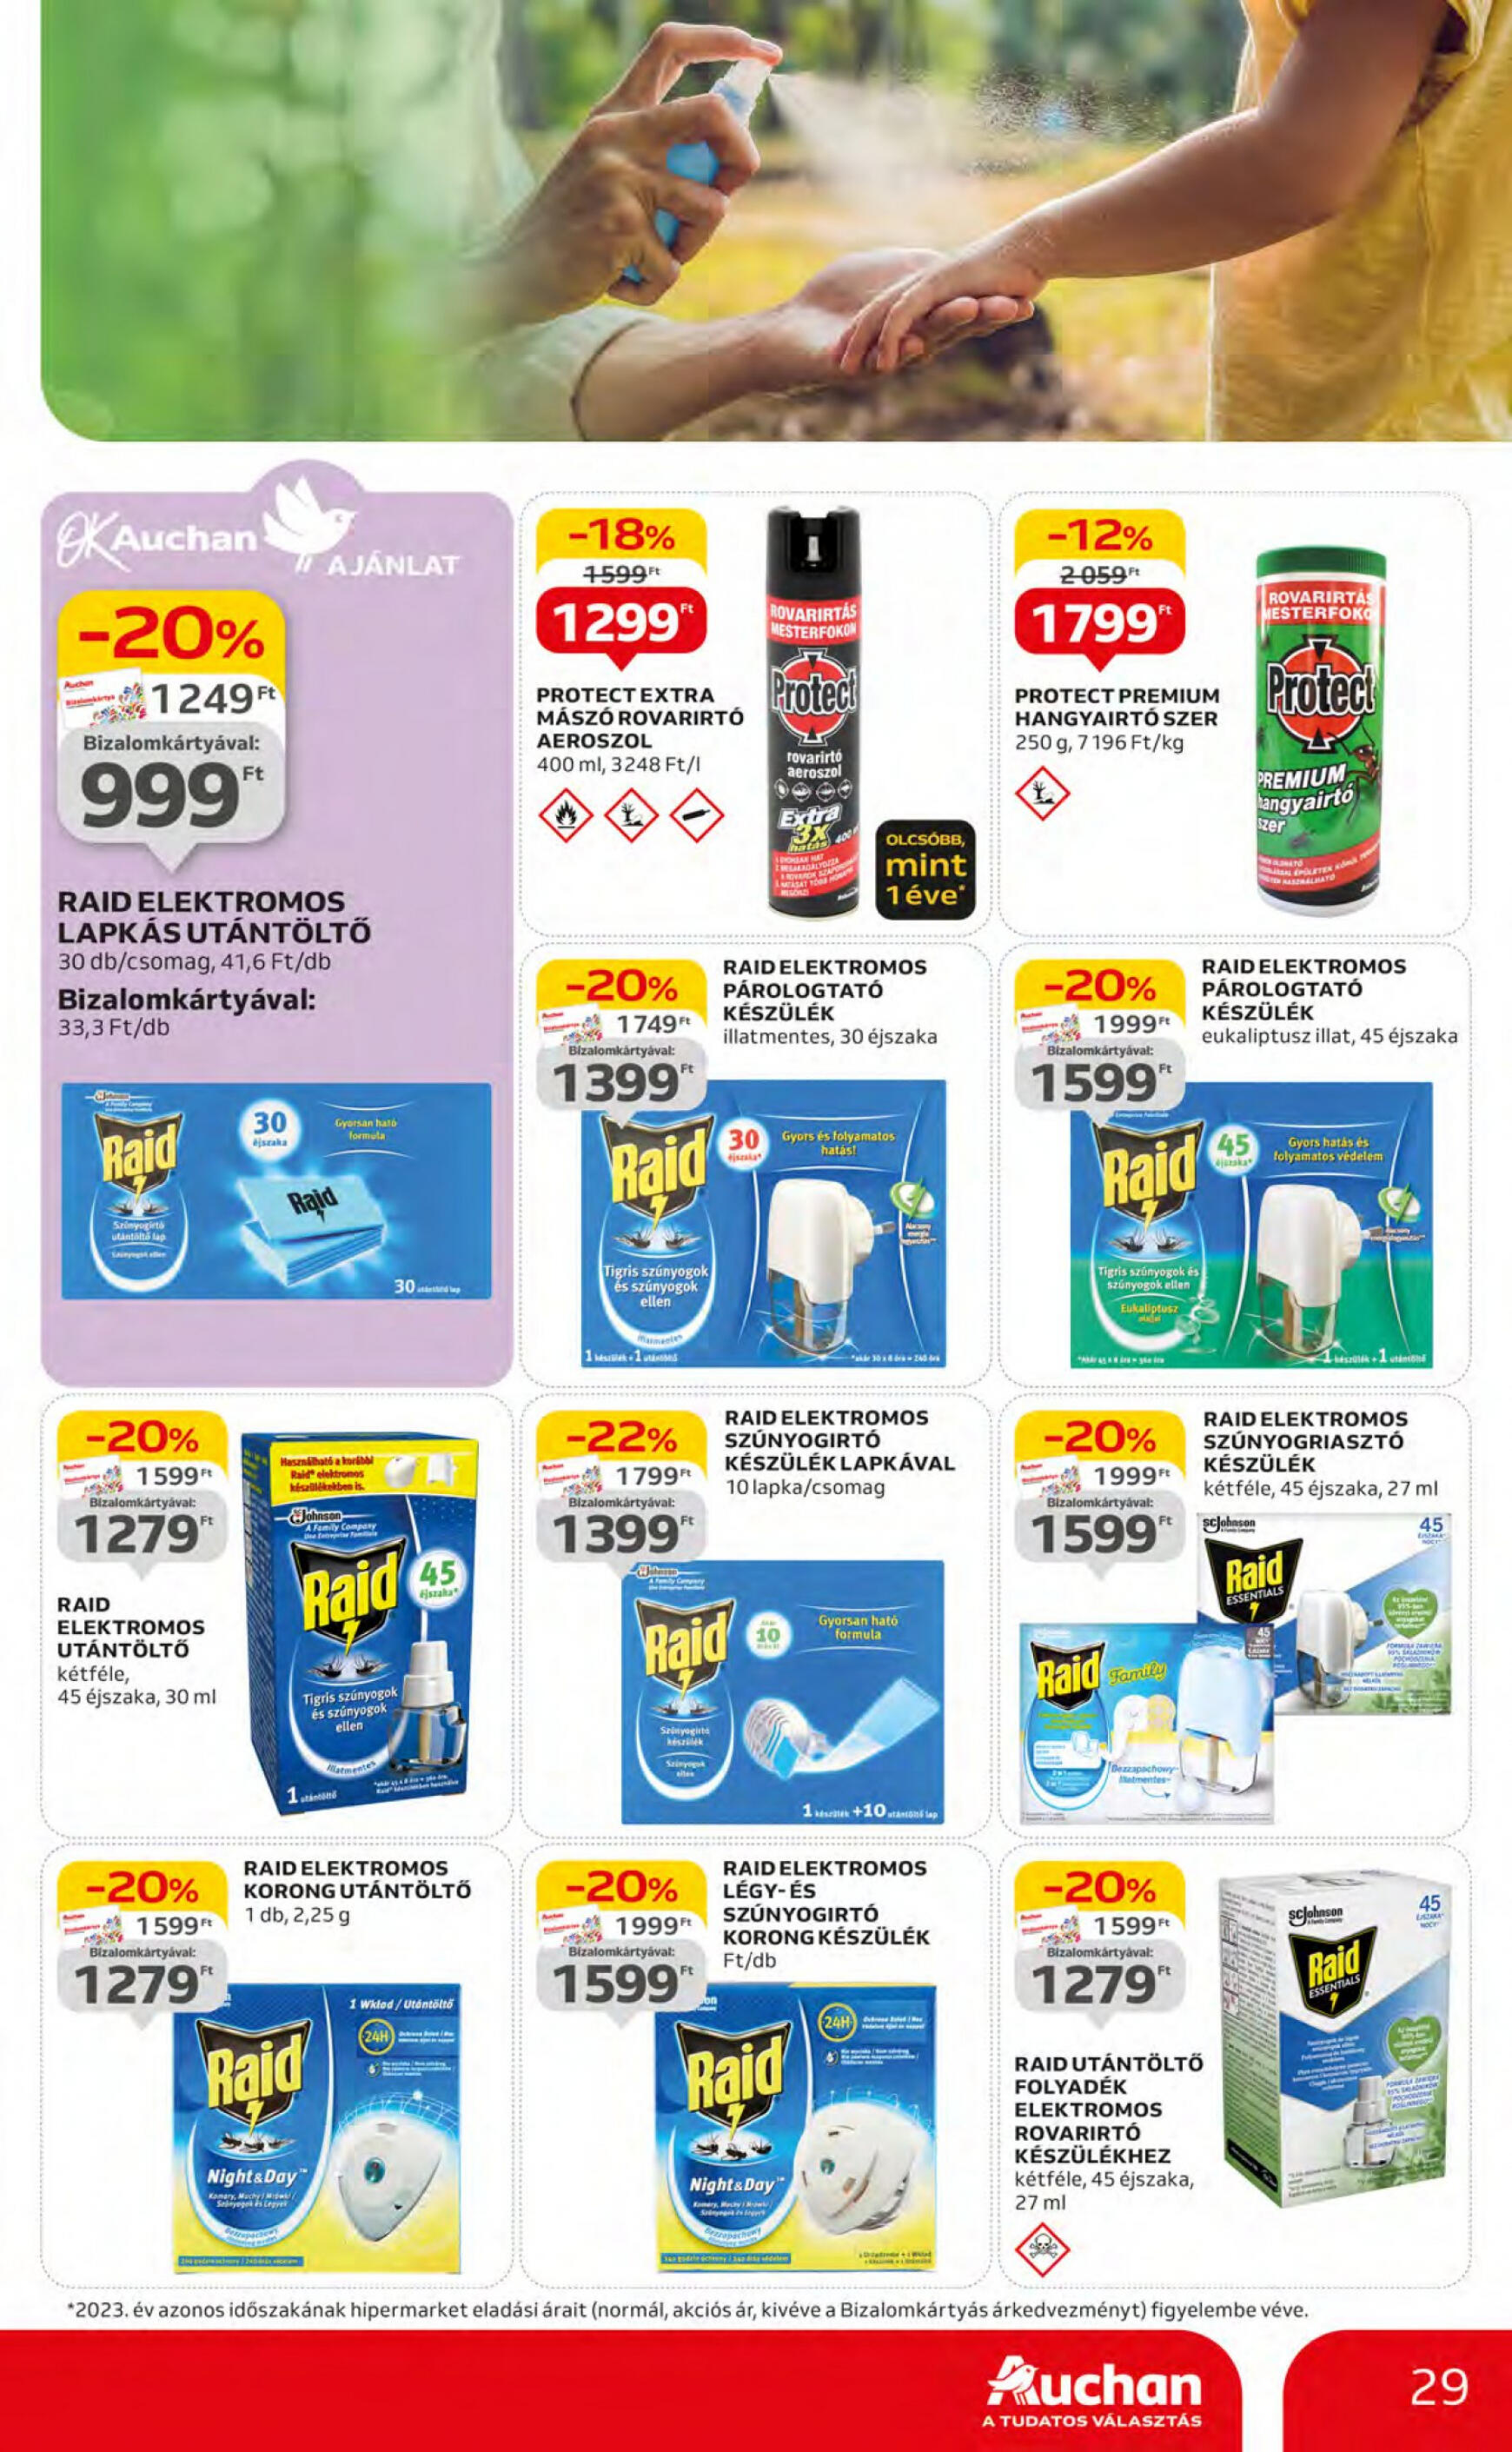 auchan - Aktuális újság Auchan 05.09. - 05.15. - page: 29